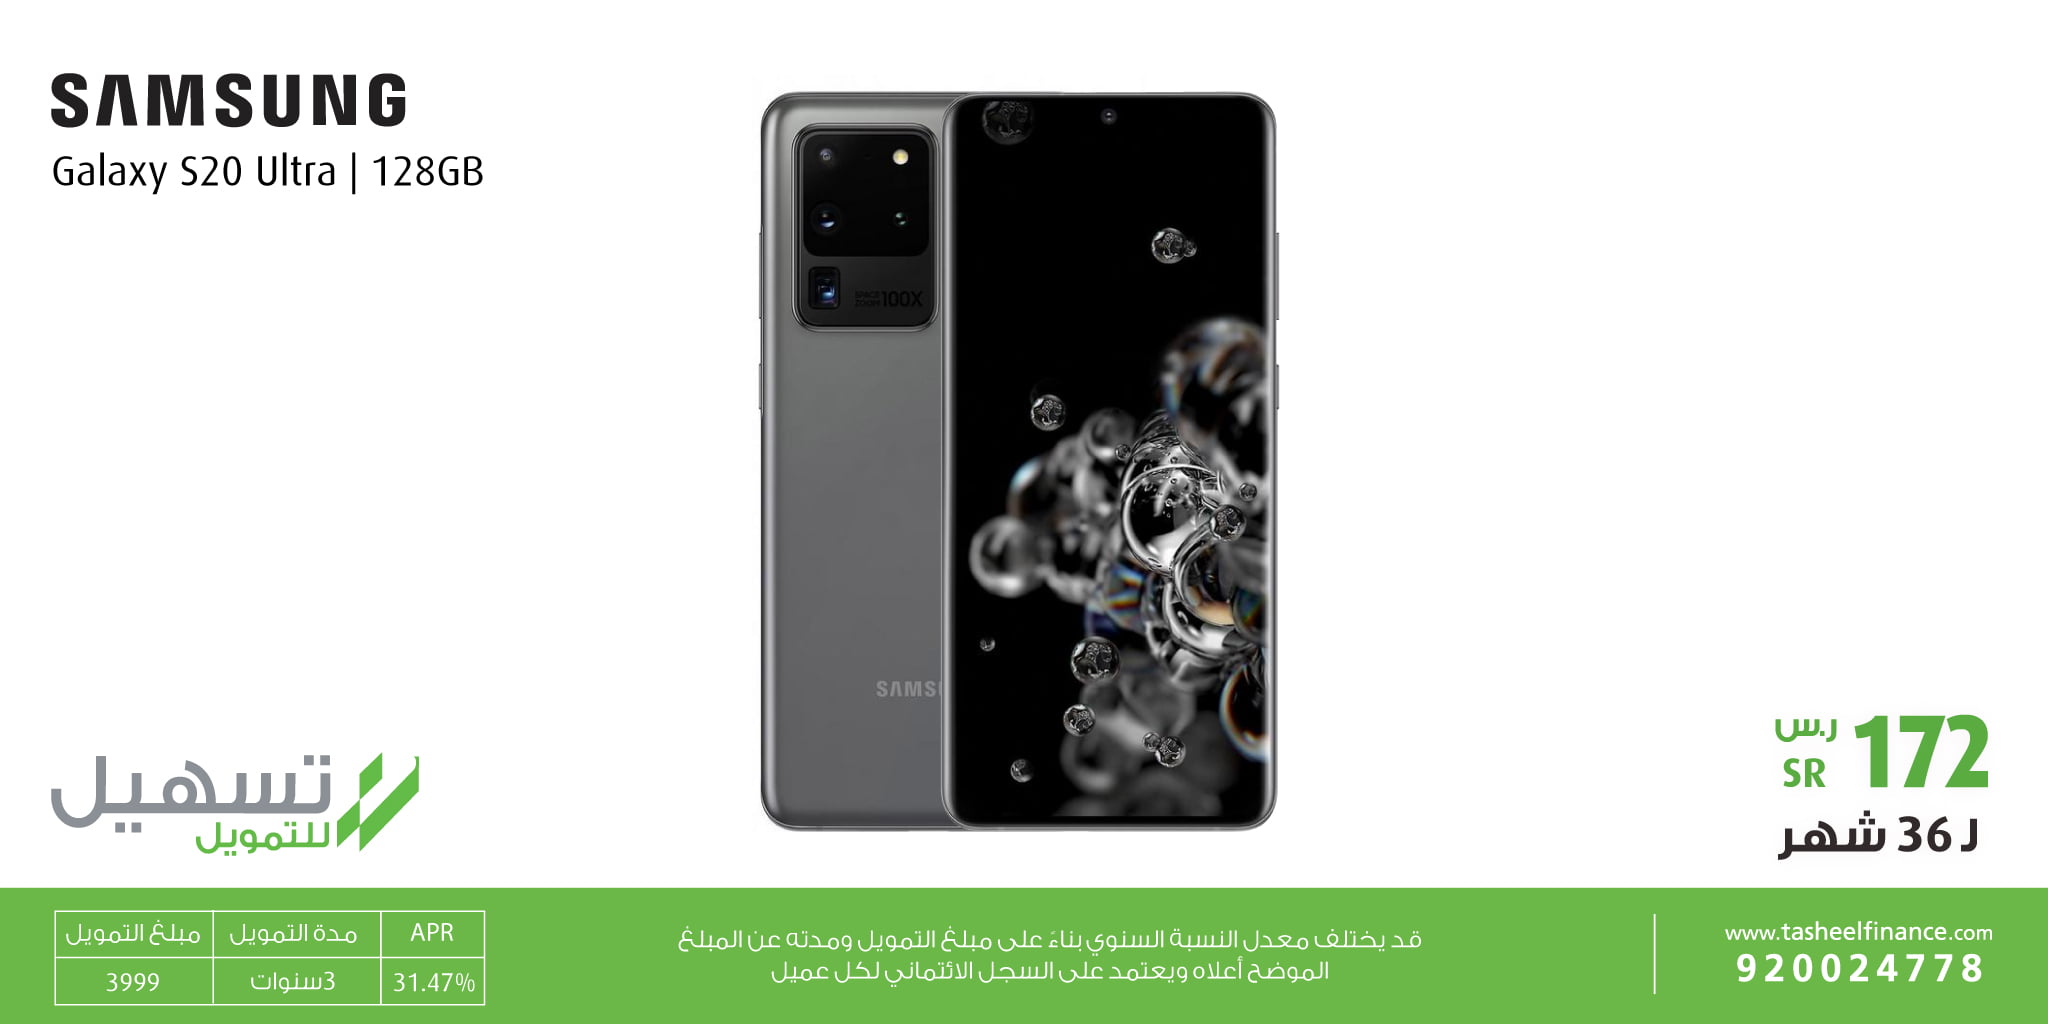 EiXOaM3VkAA v0d - عروض اكسترا السعودية علي جوالات Samsung Galaxy S20 بالتقسيط اليوم 20-9-2020